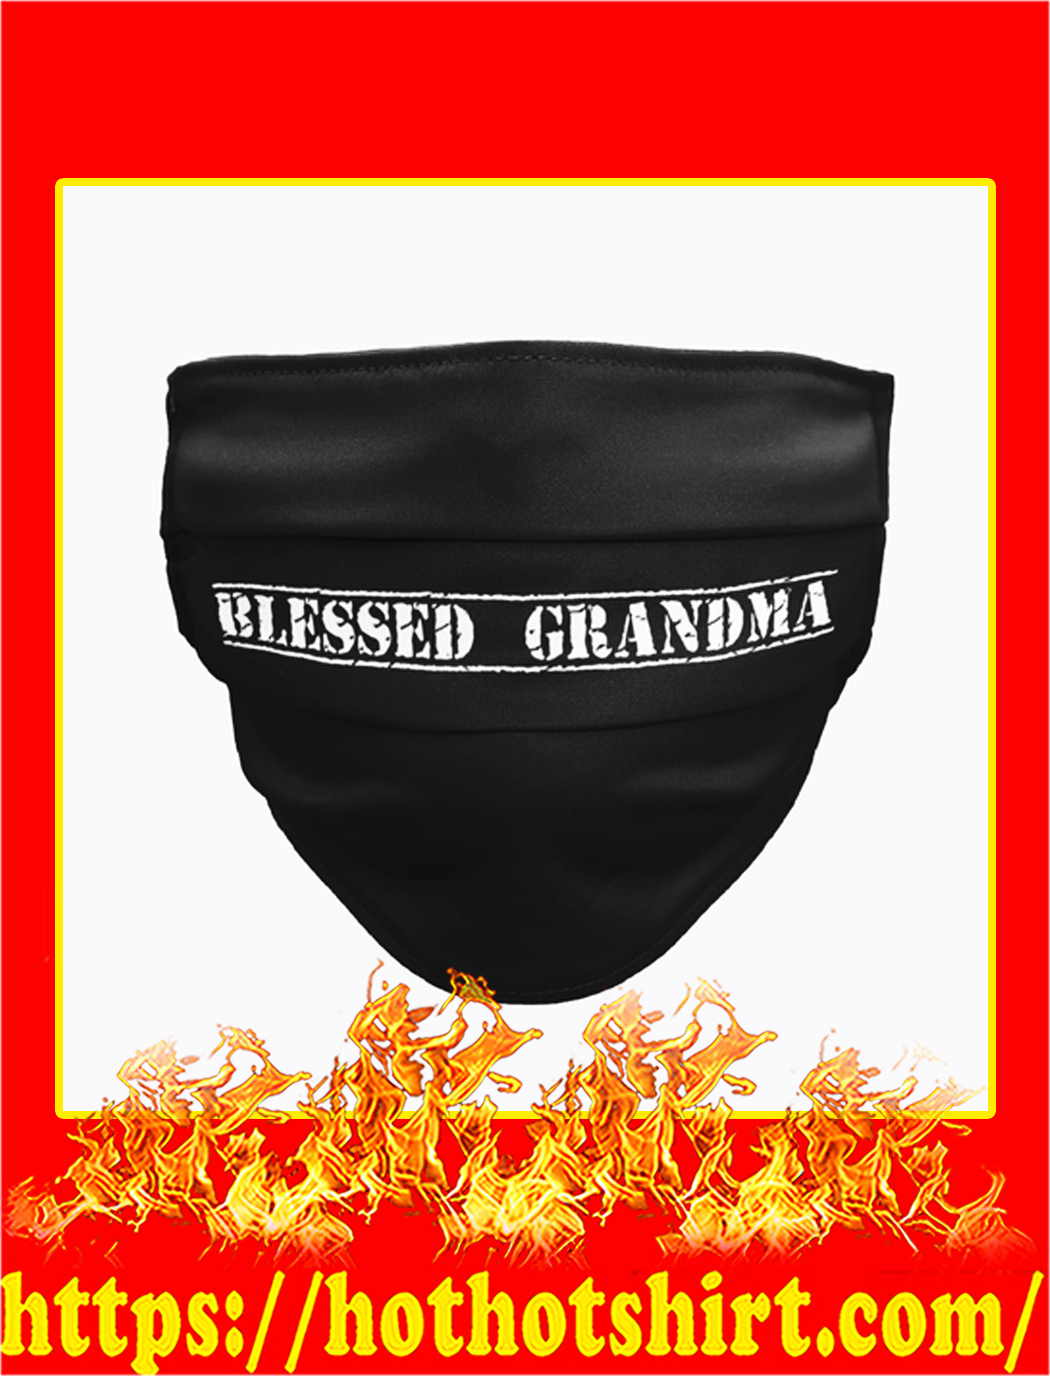 Blessed grandma face mask